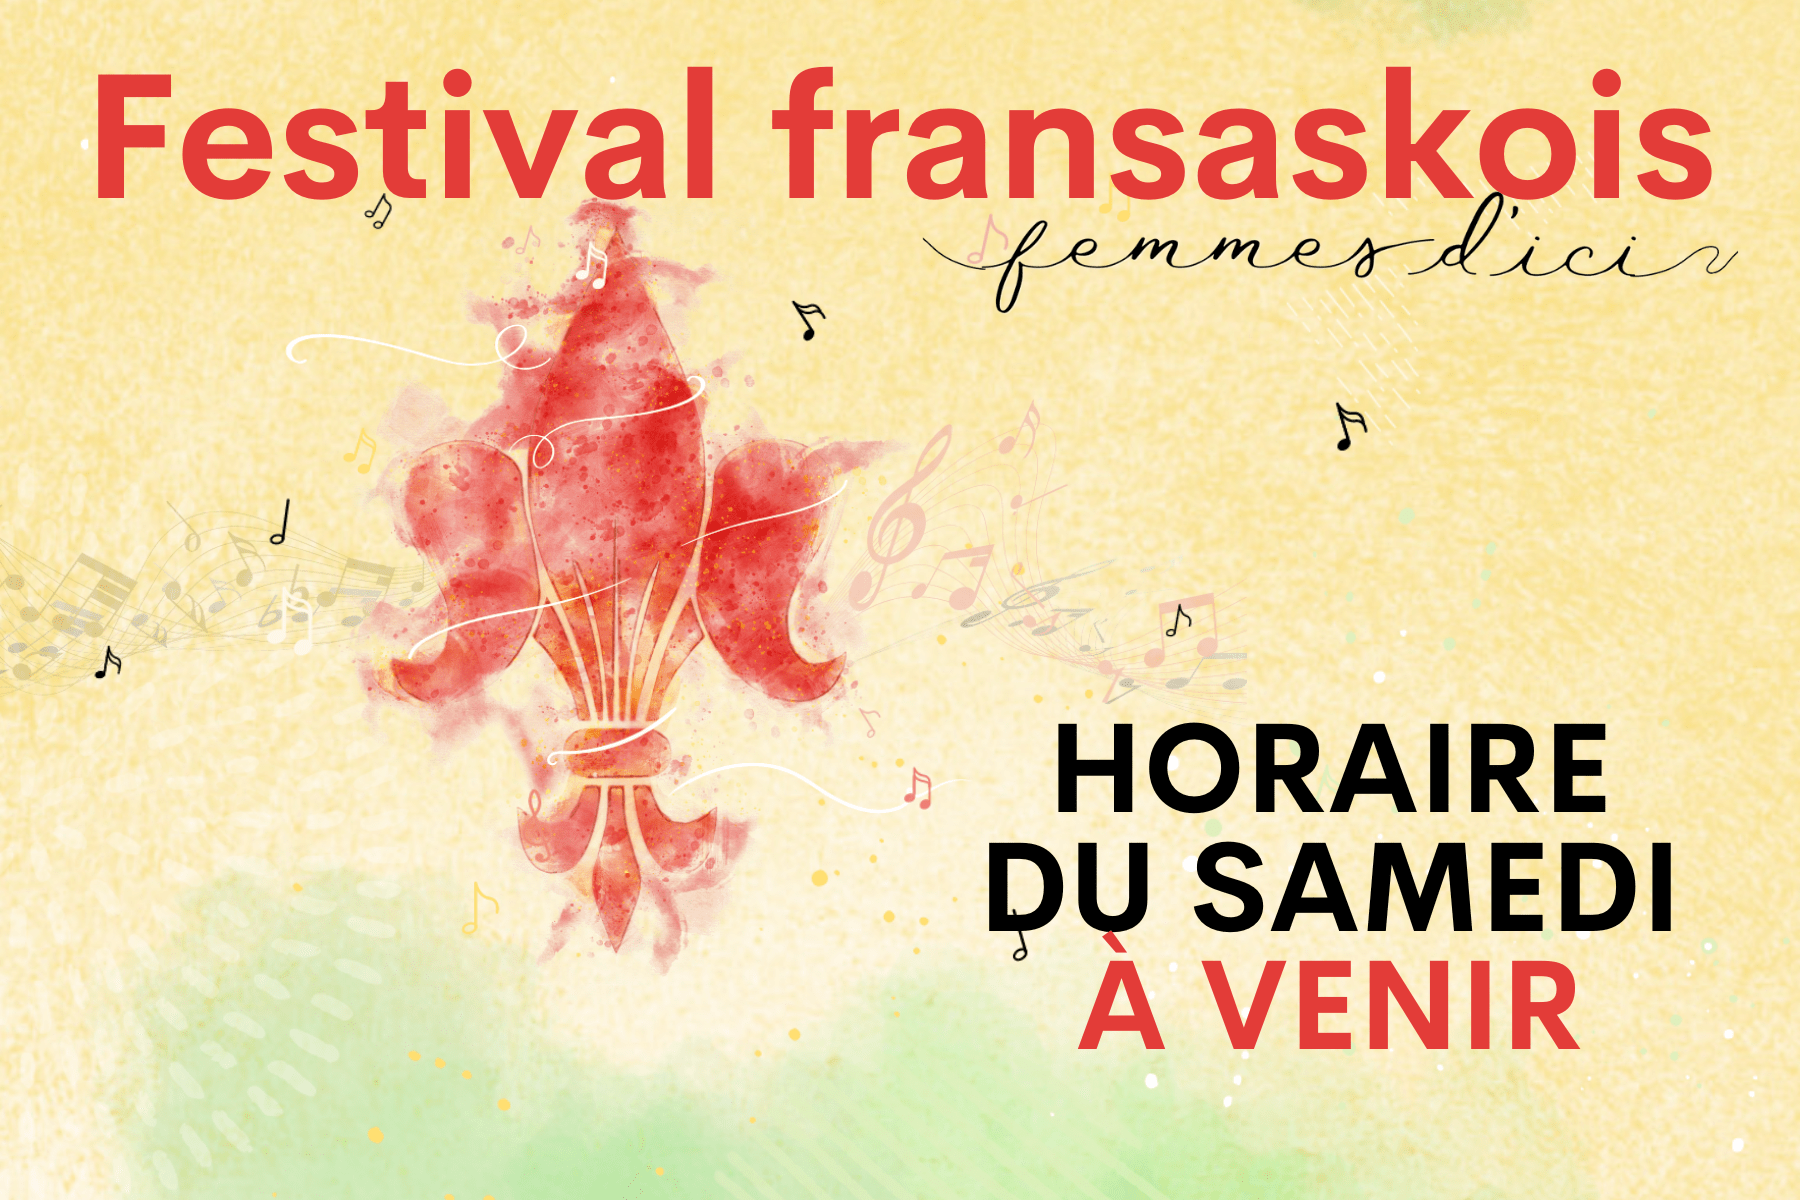 Festival Fransaskois femmes d'ici. Horaire du samedi à venir.